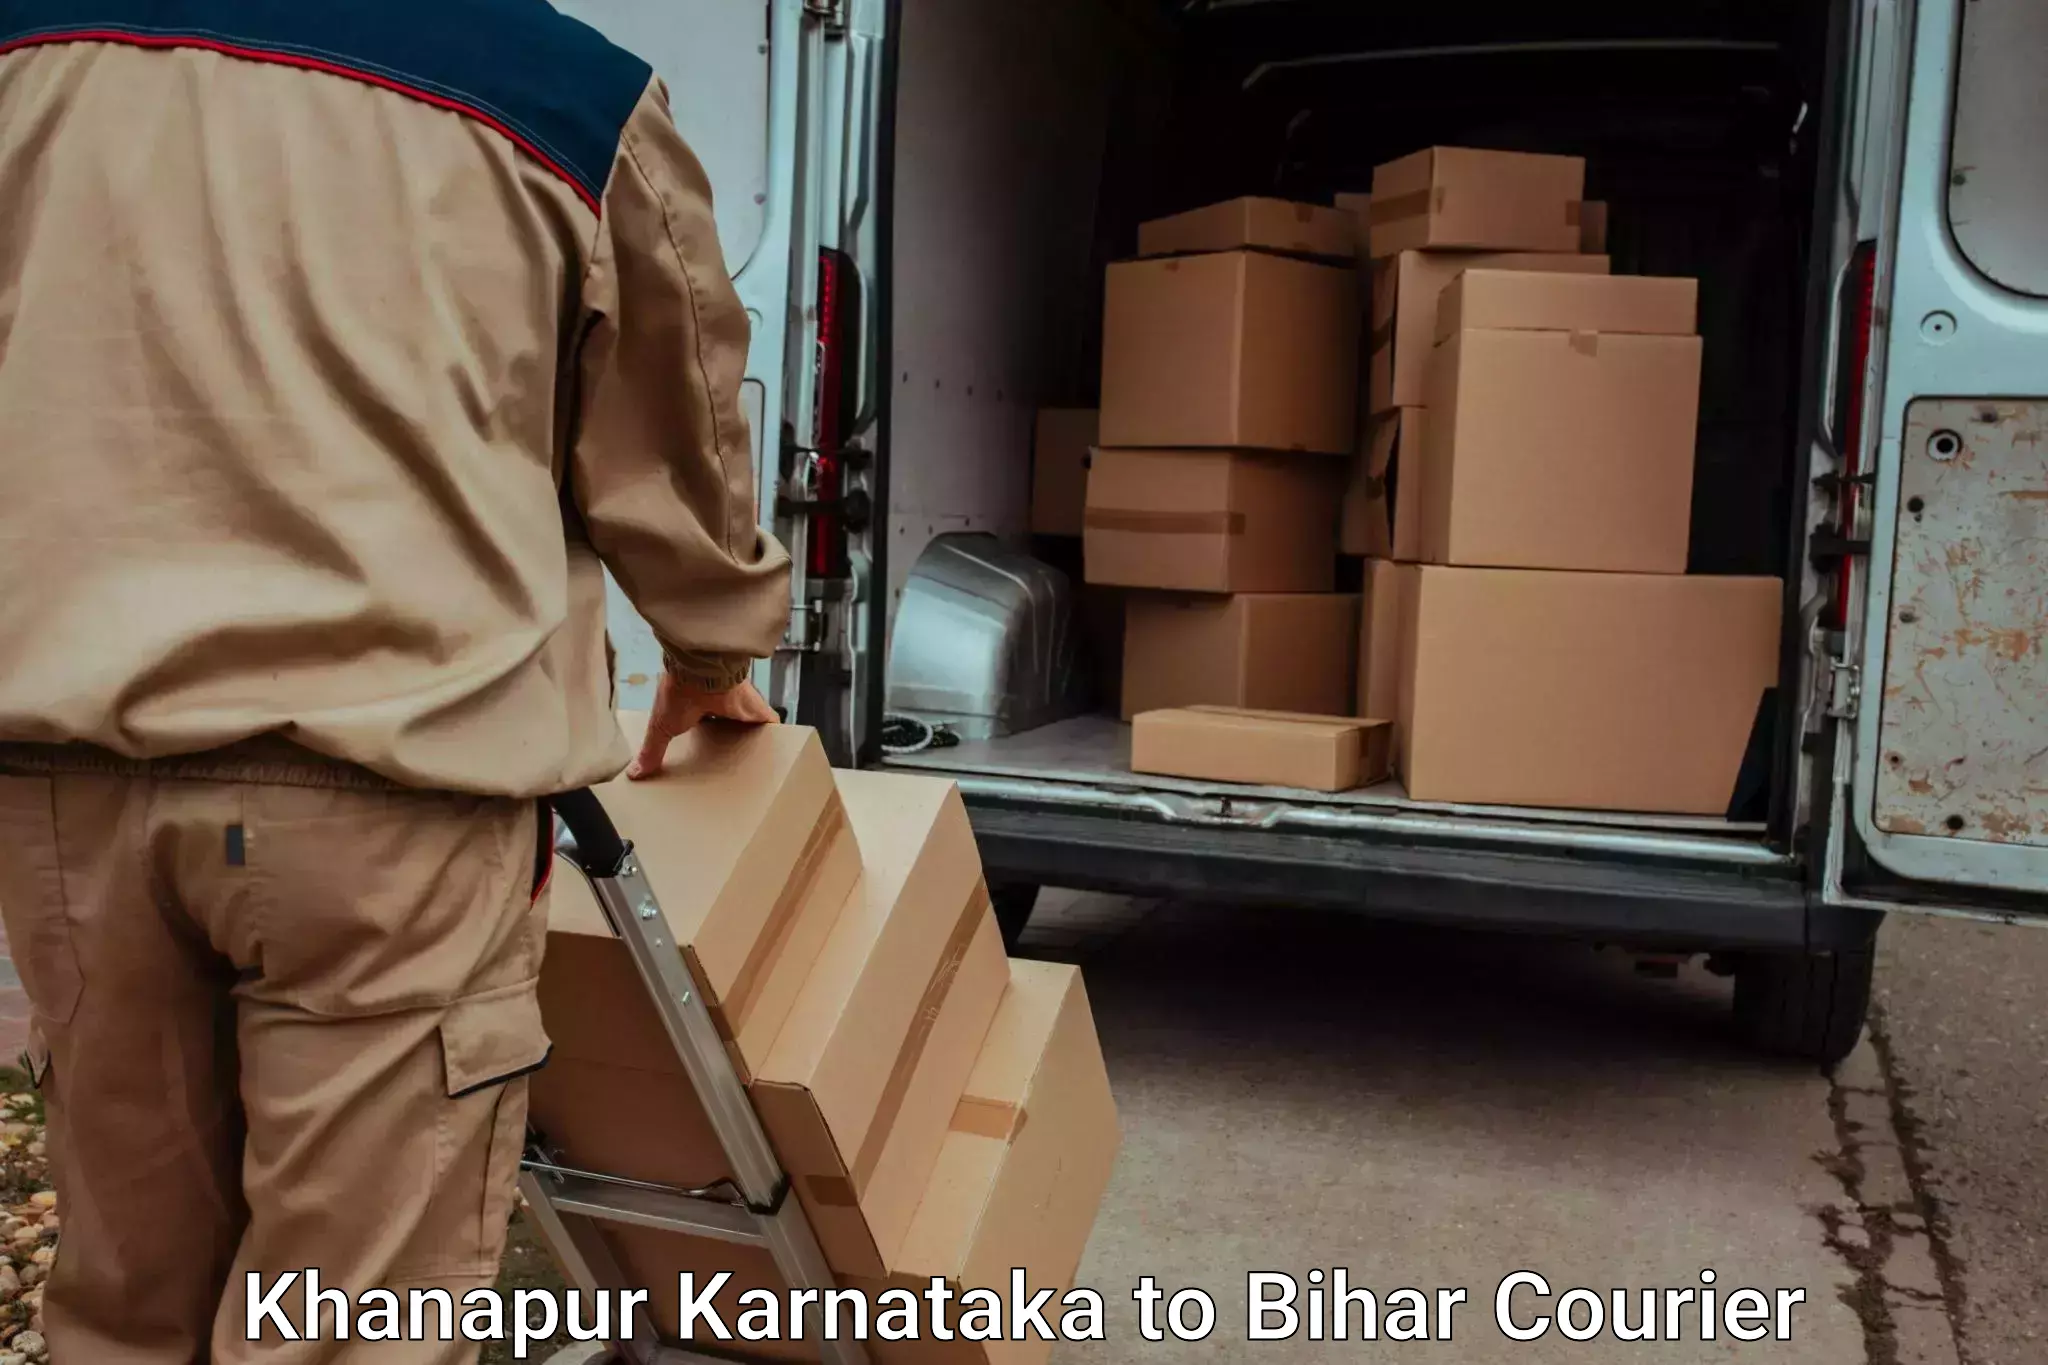 Luggage transport company Khanapur Karnataka to Parsauni